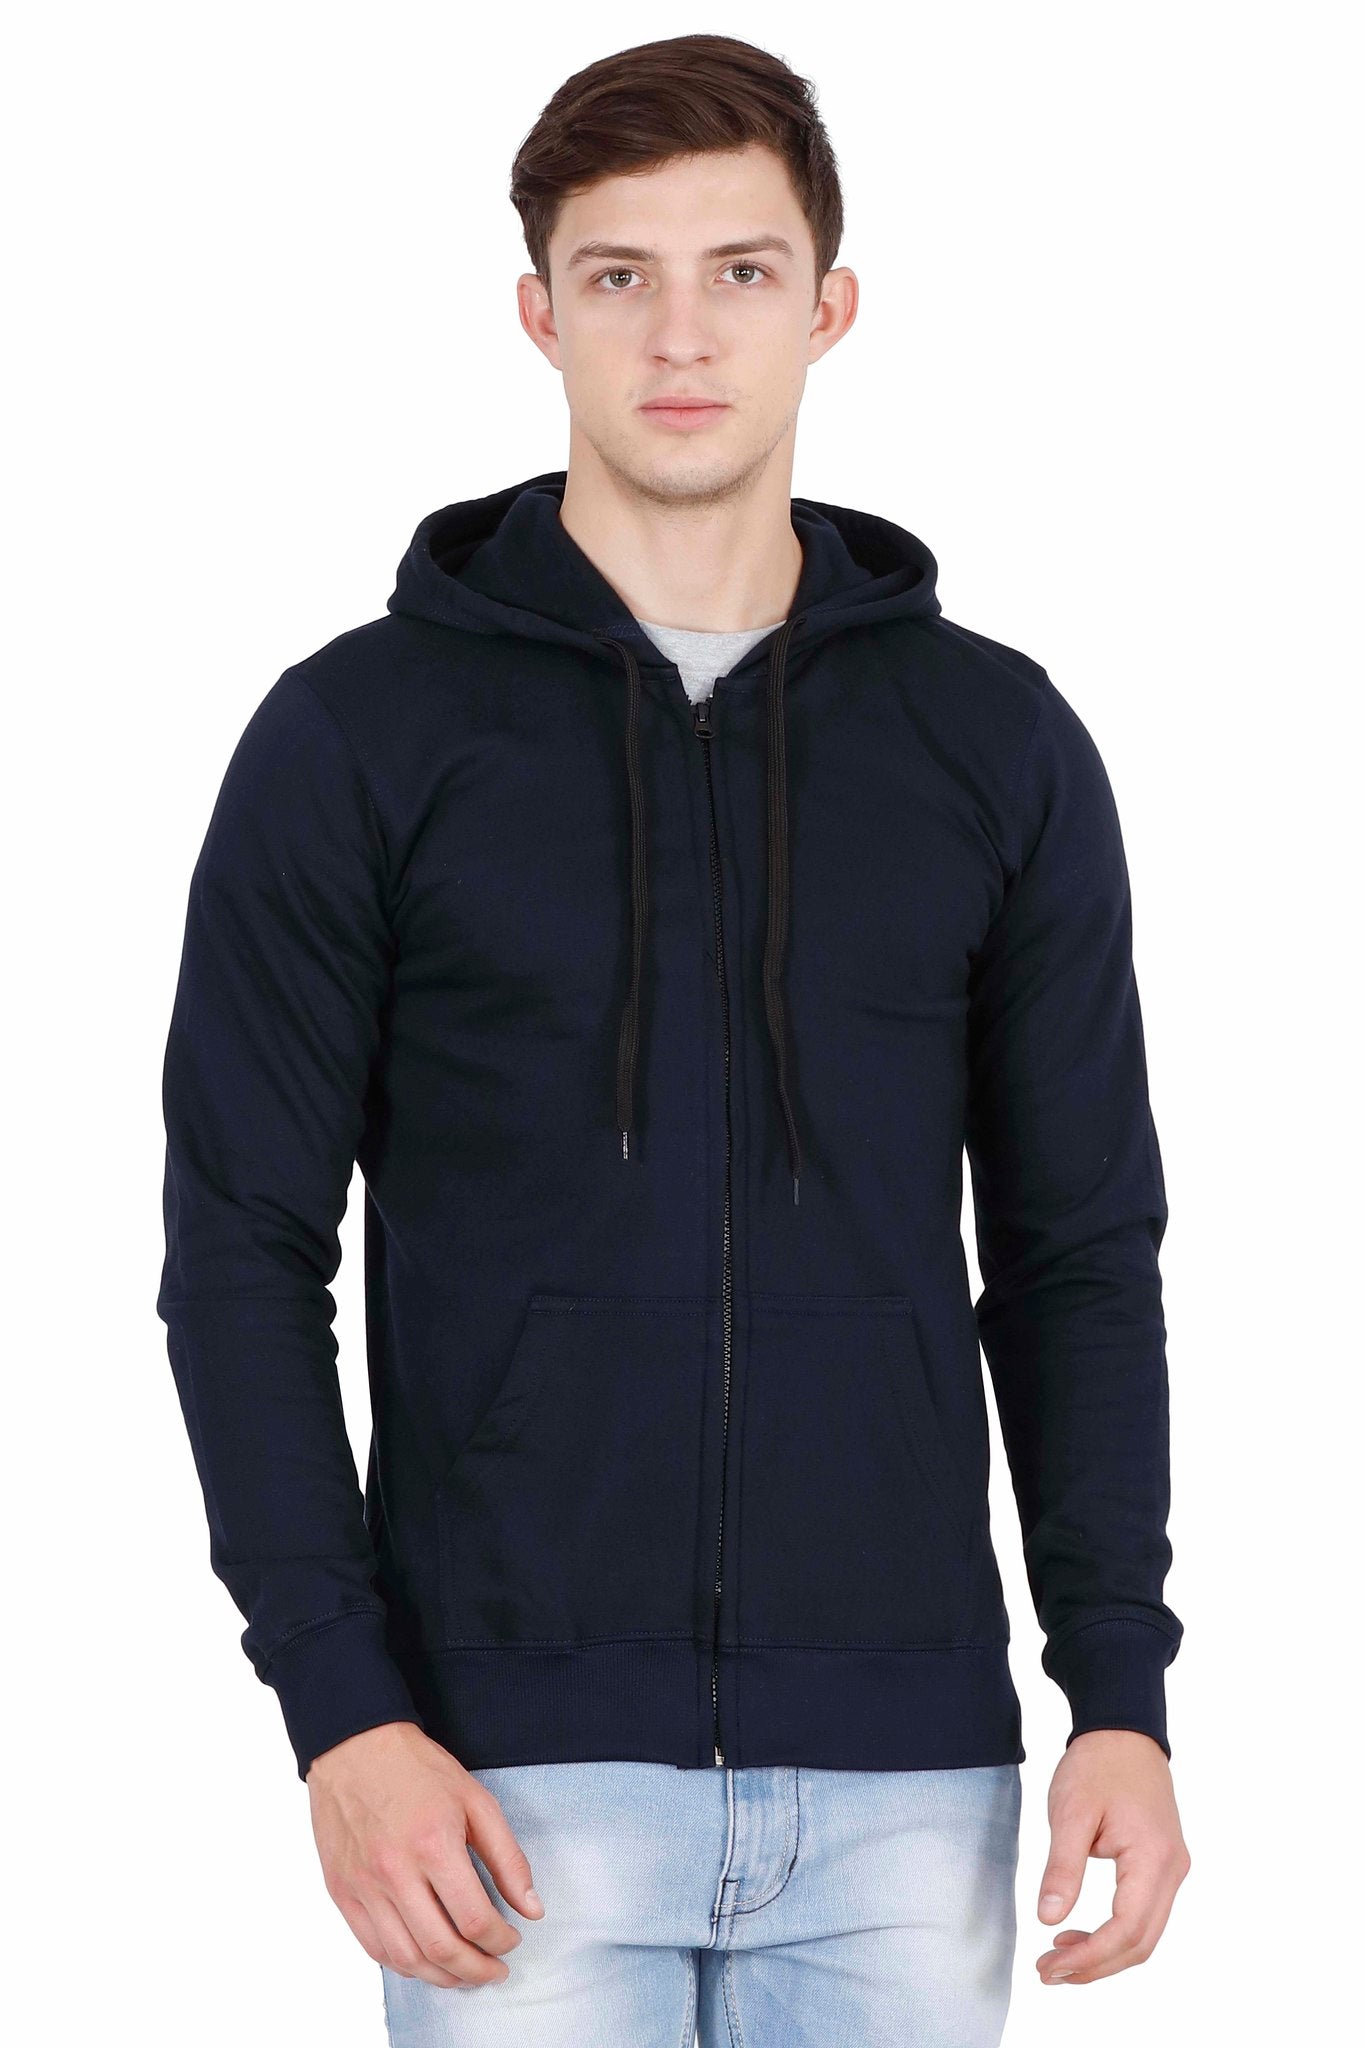 Men's Cotton Plain Full Sleeve Navy Blue Color Sweatshirt/Hoodies